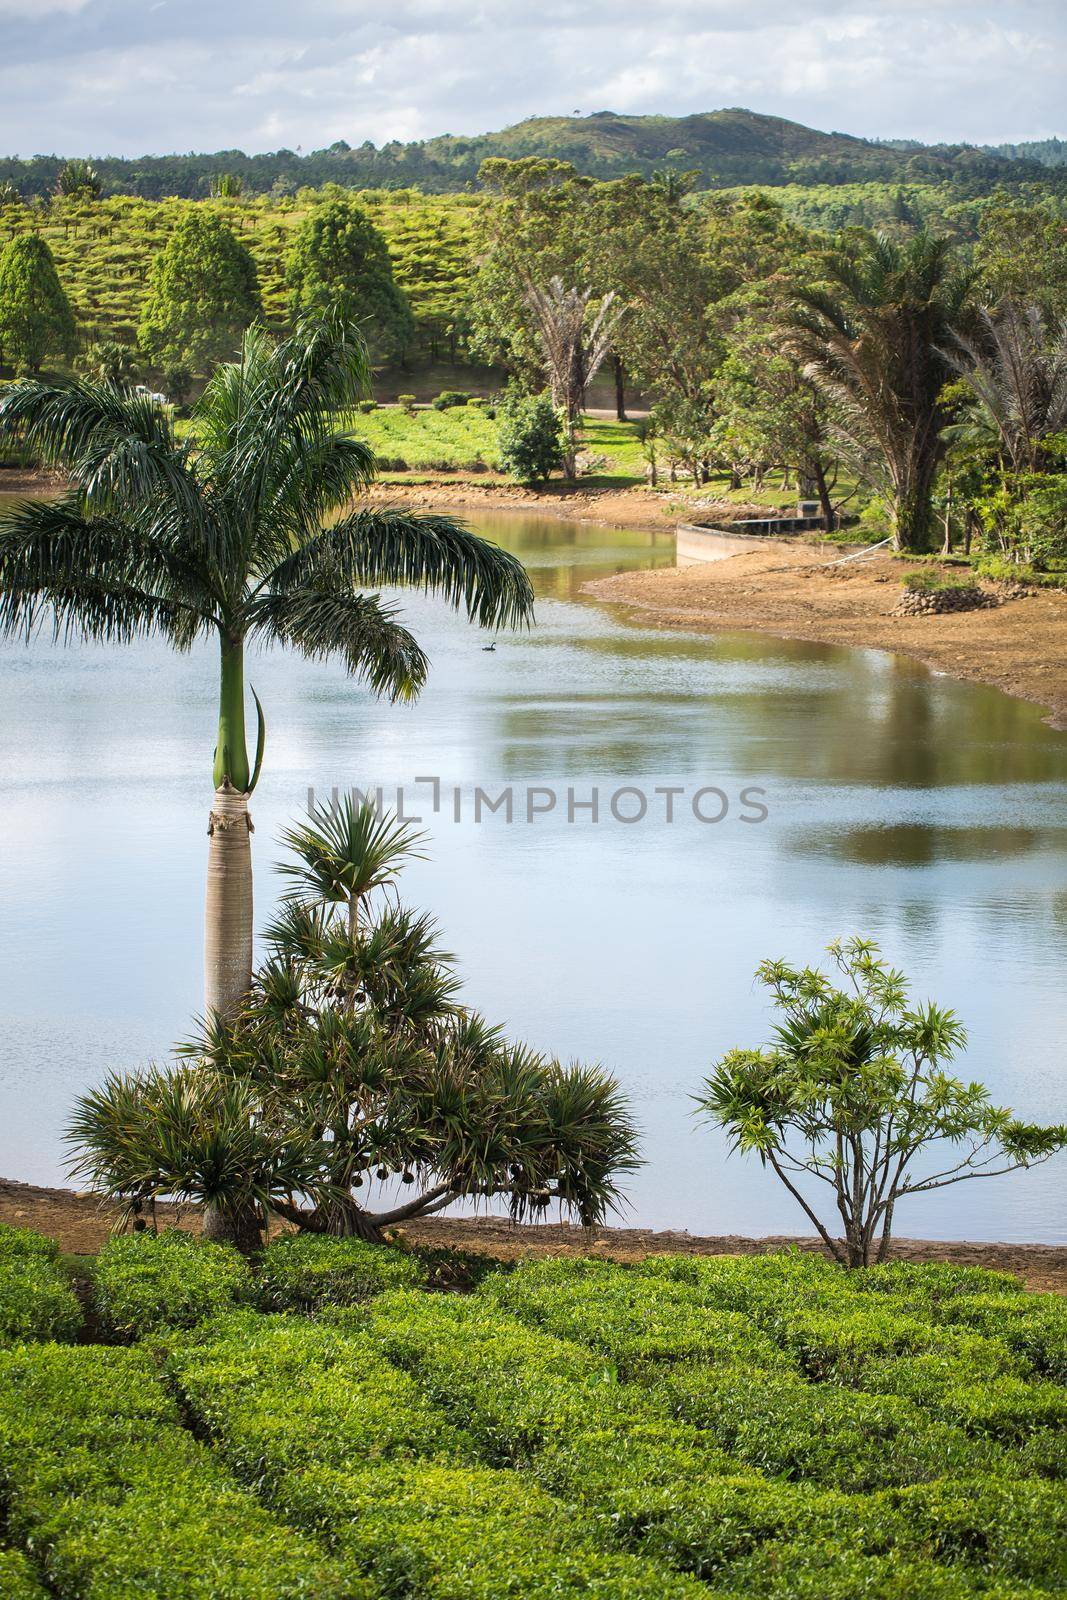 Views of tea plantation, a lake and palm trees.